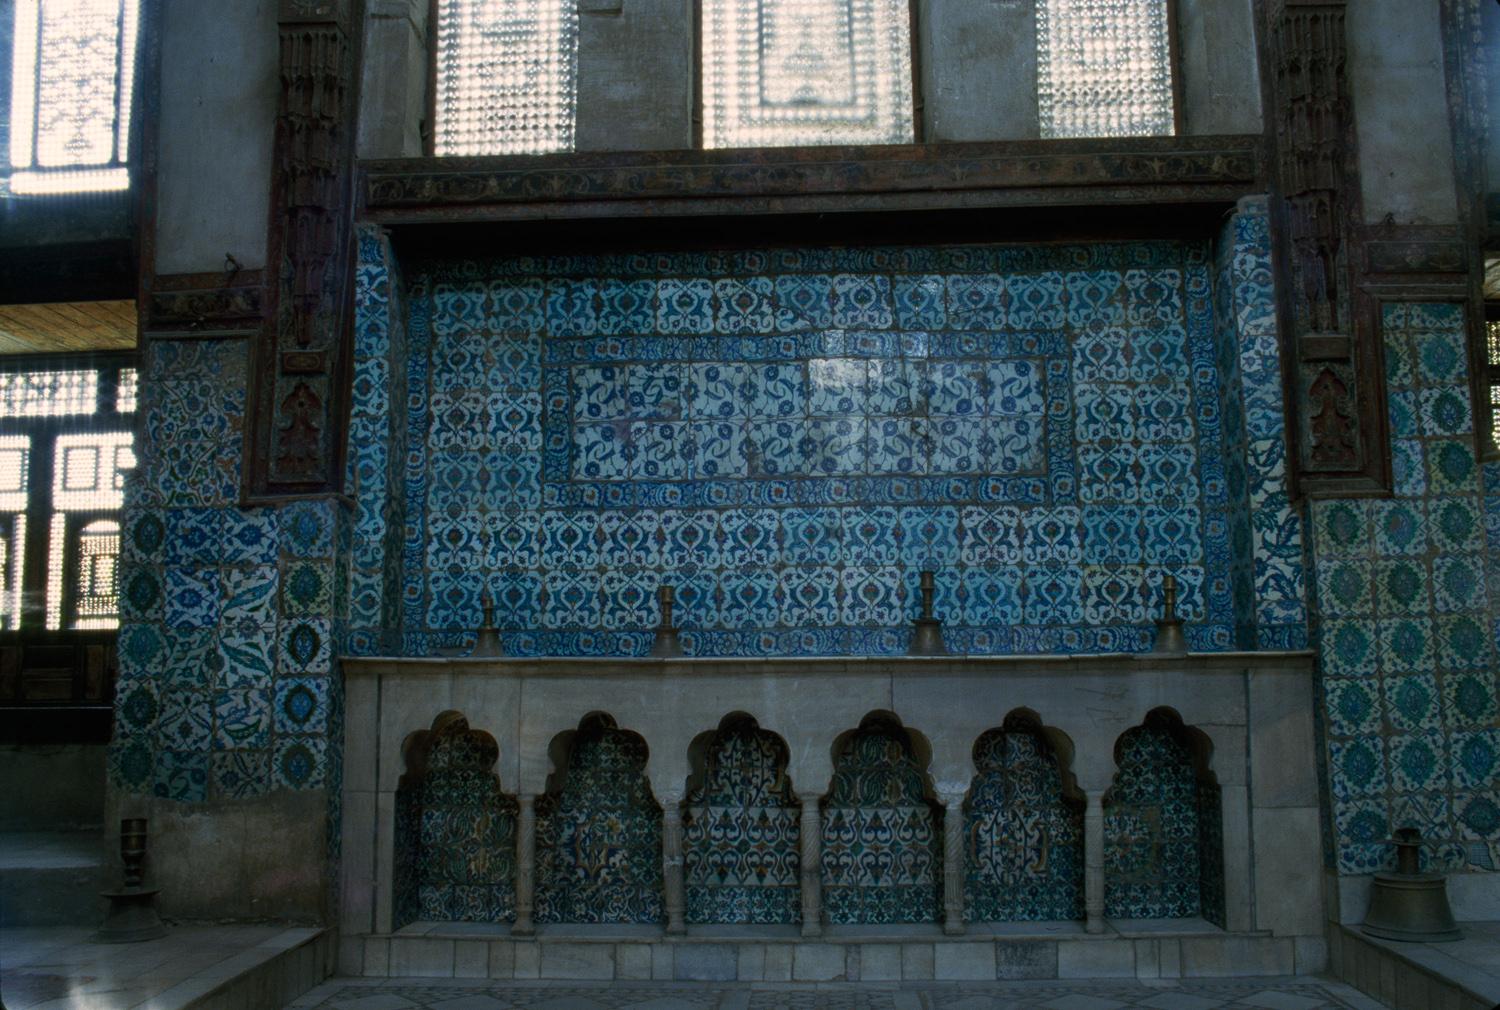 Harem reception hall with Iznik tiles in central hall (durqa'a)